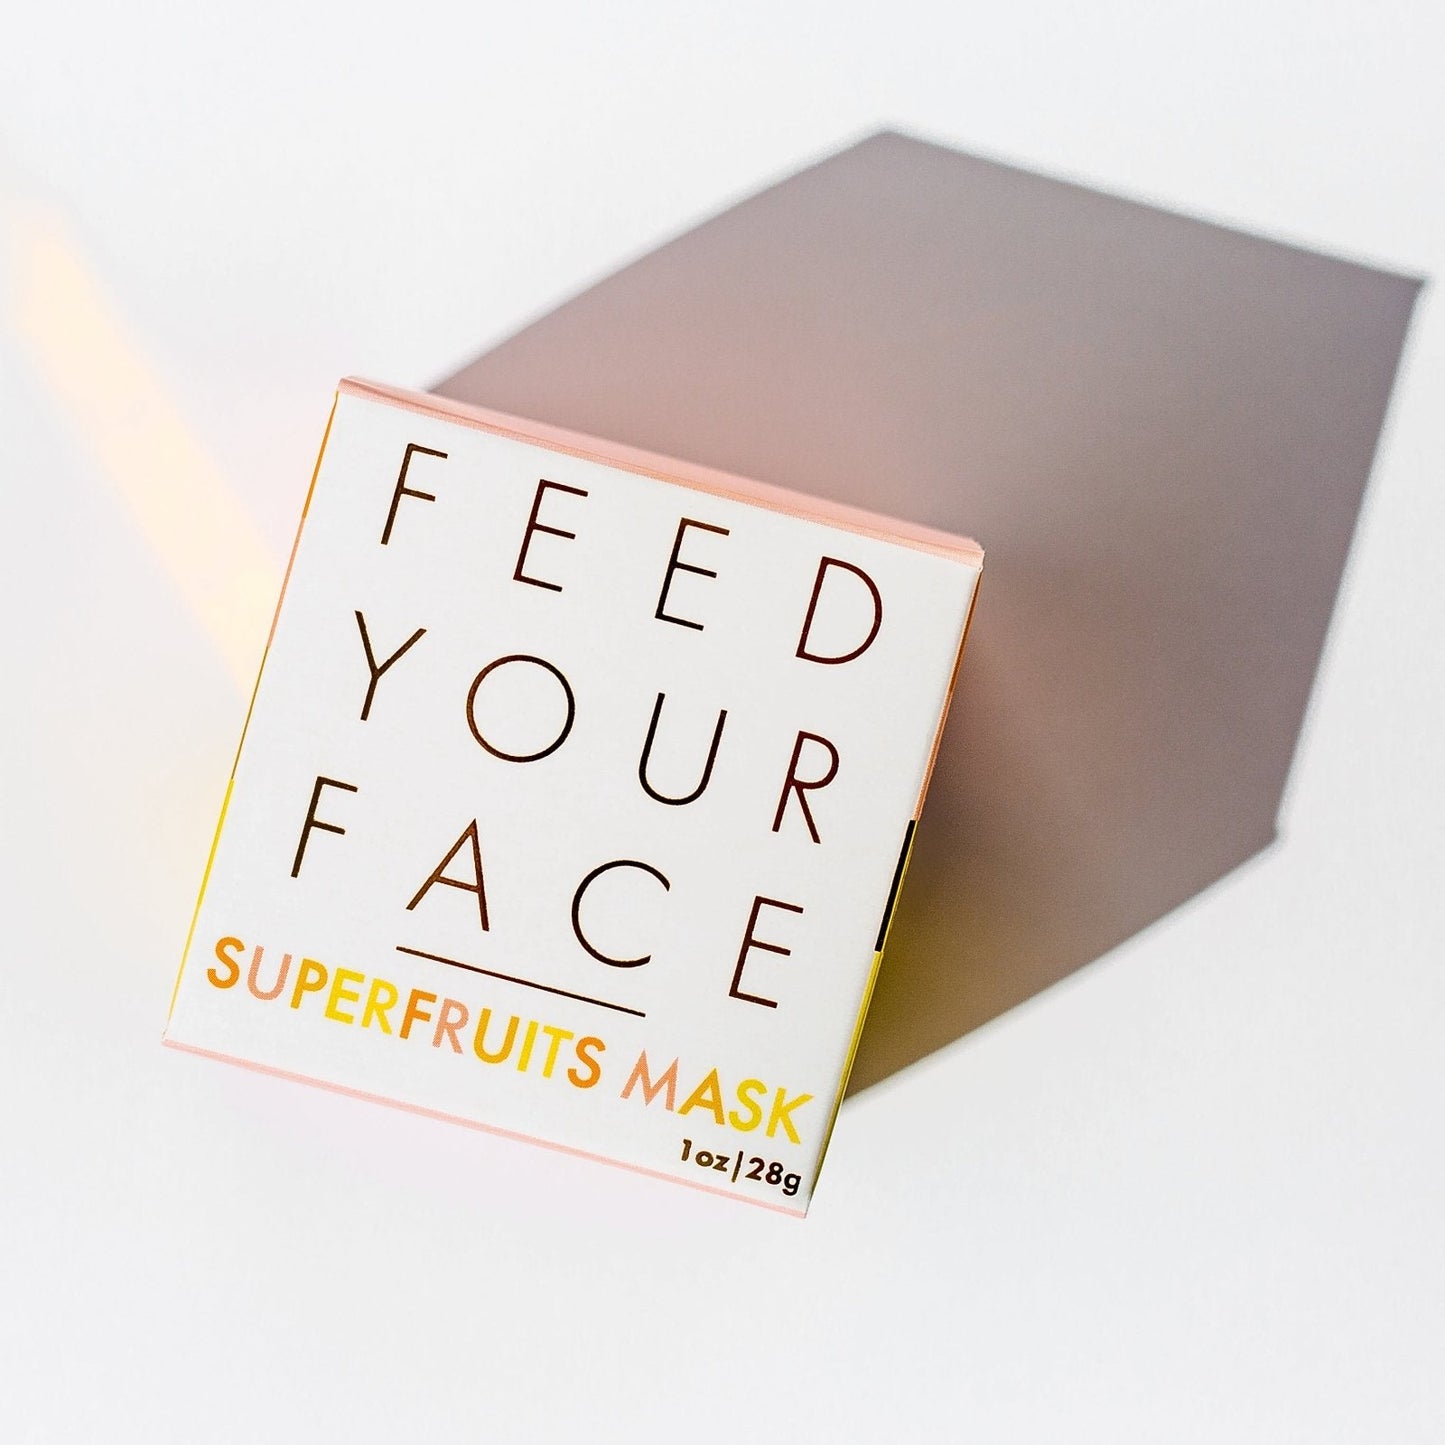 SUPERFRUITS face mask by LUA skincare